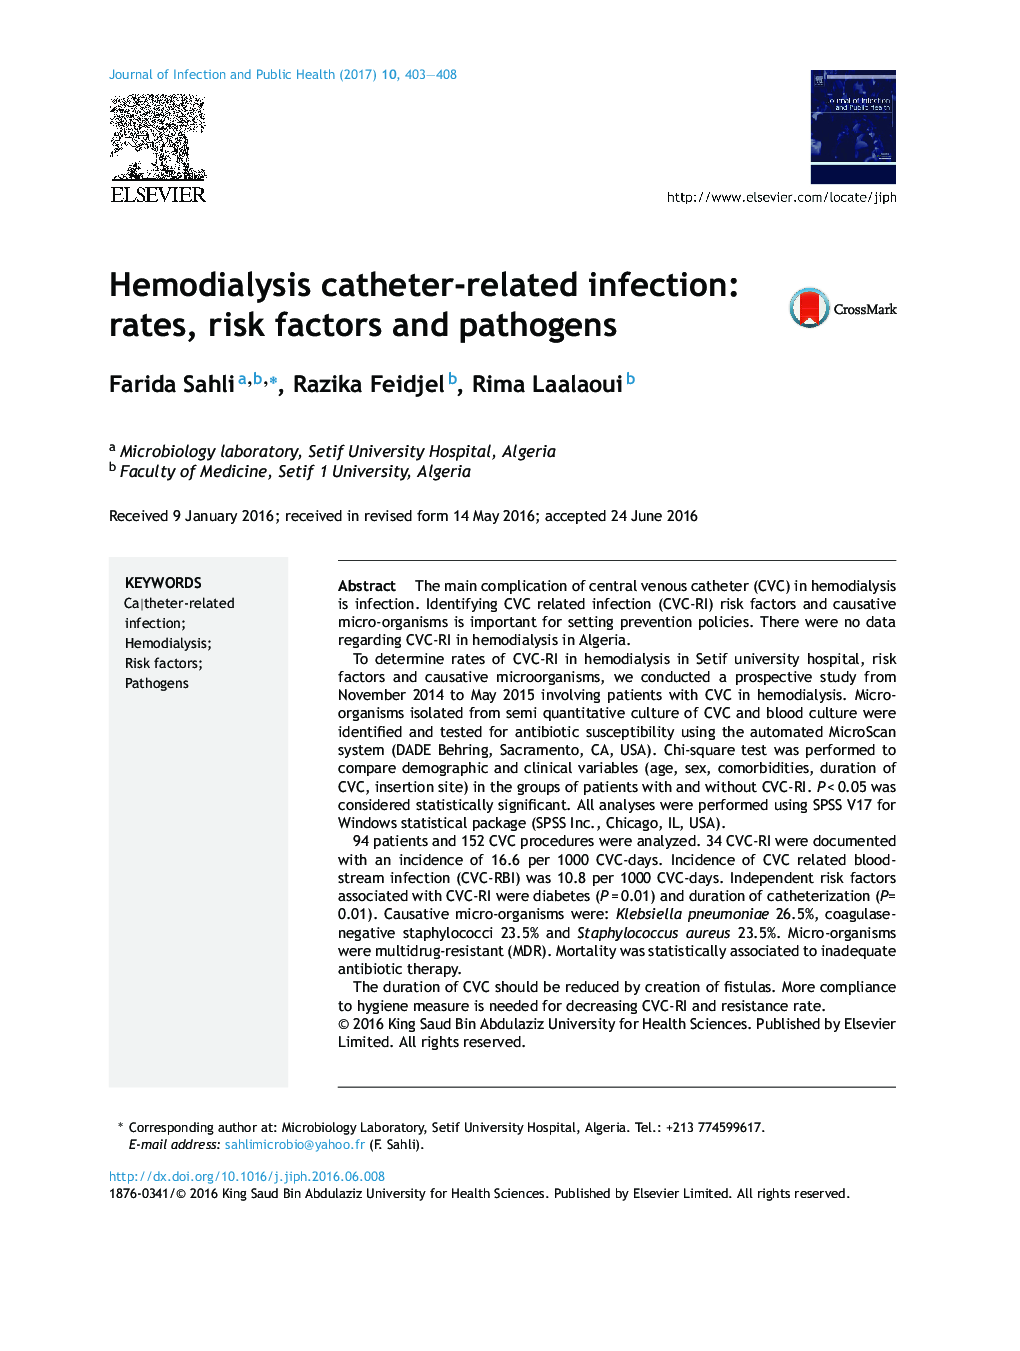 عفونت مرتبط با کاتتر همودیالیز: نرخ، عوامل خطر و پاتوژن 